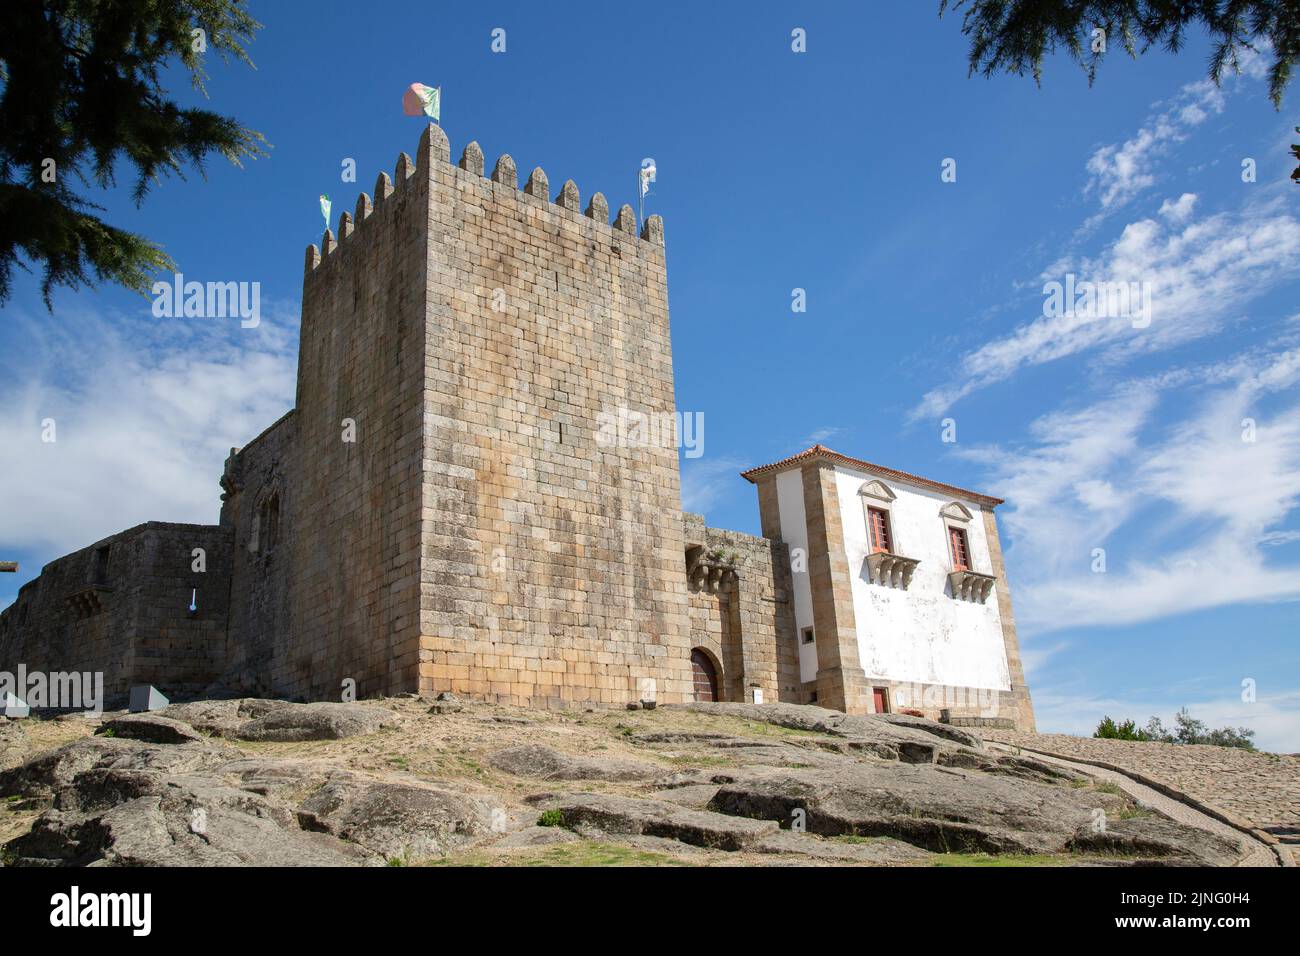 Facacde of Belmonte Castle, Portugal Stock Photo